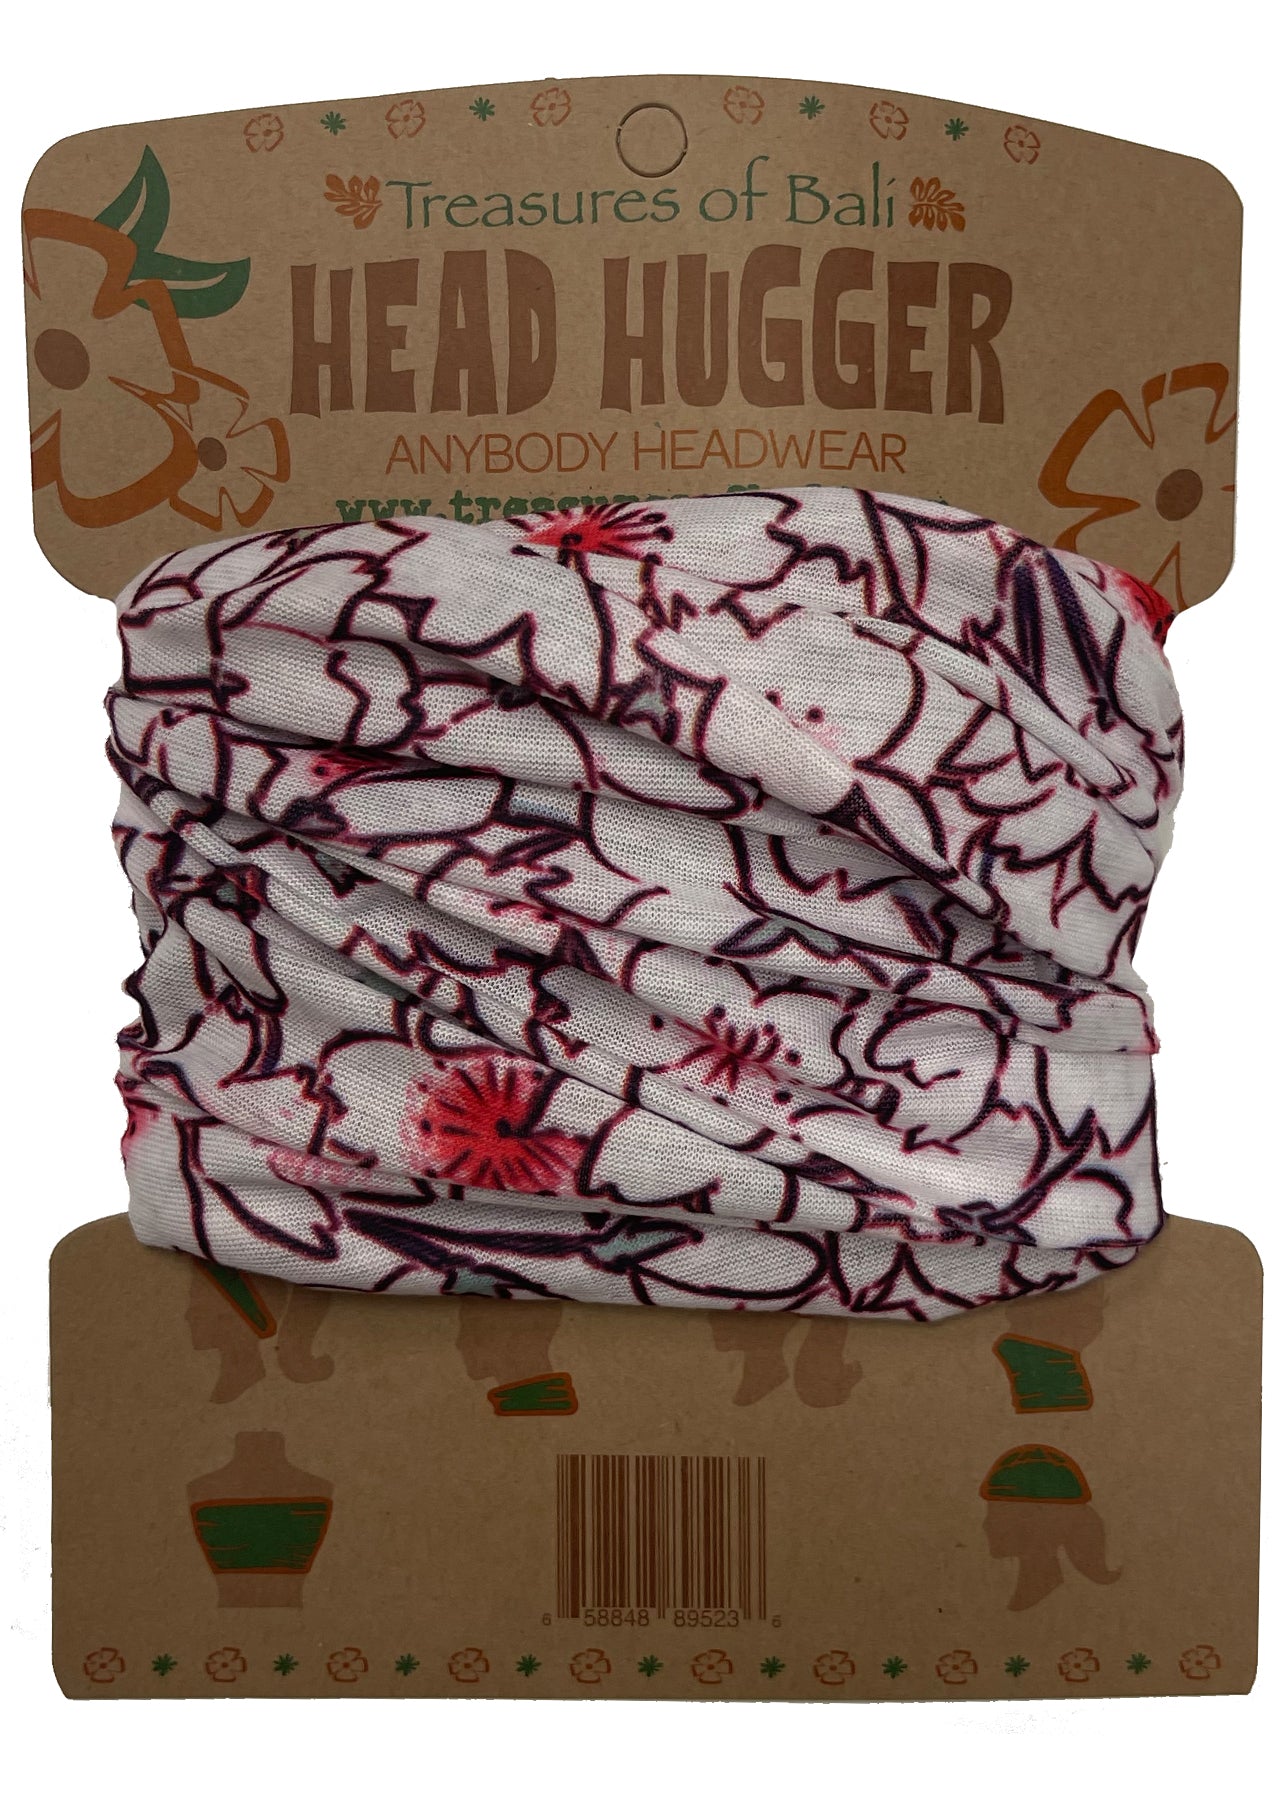 Head Hugger | White and Maroon Flowers